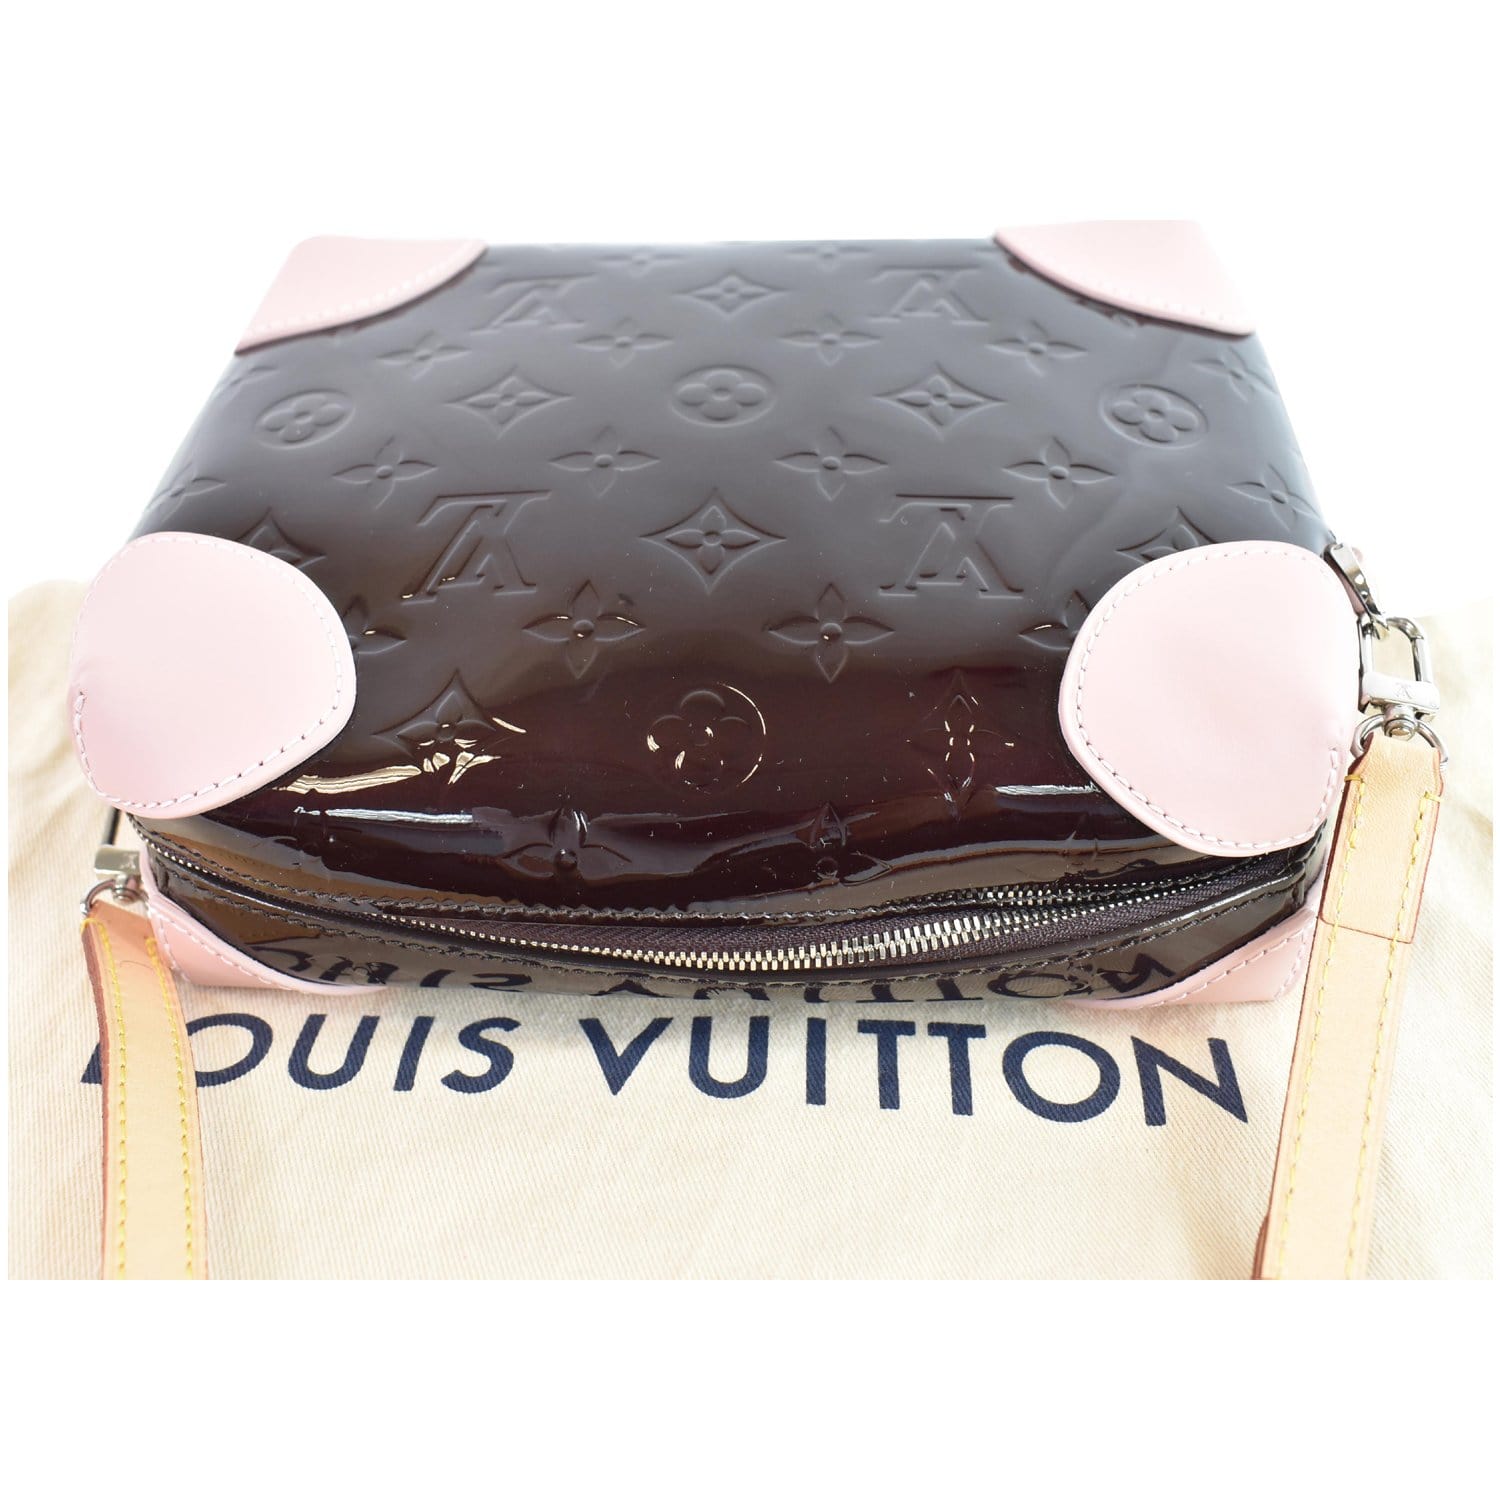 Louis Vuitton Vernis Venice Crossbody or Clutch Handbag